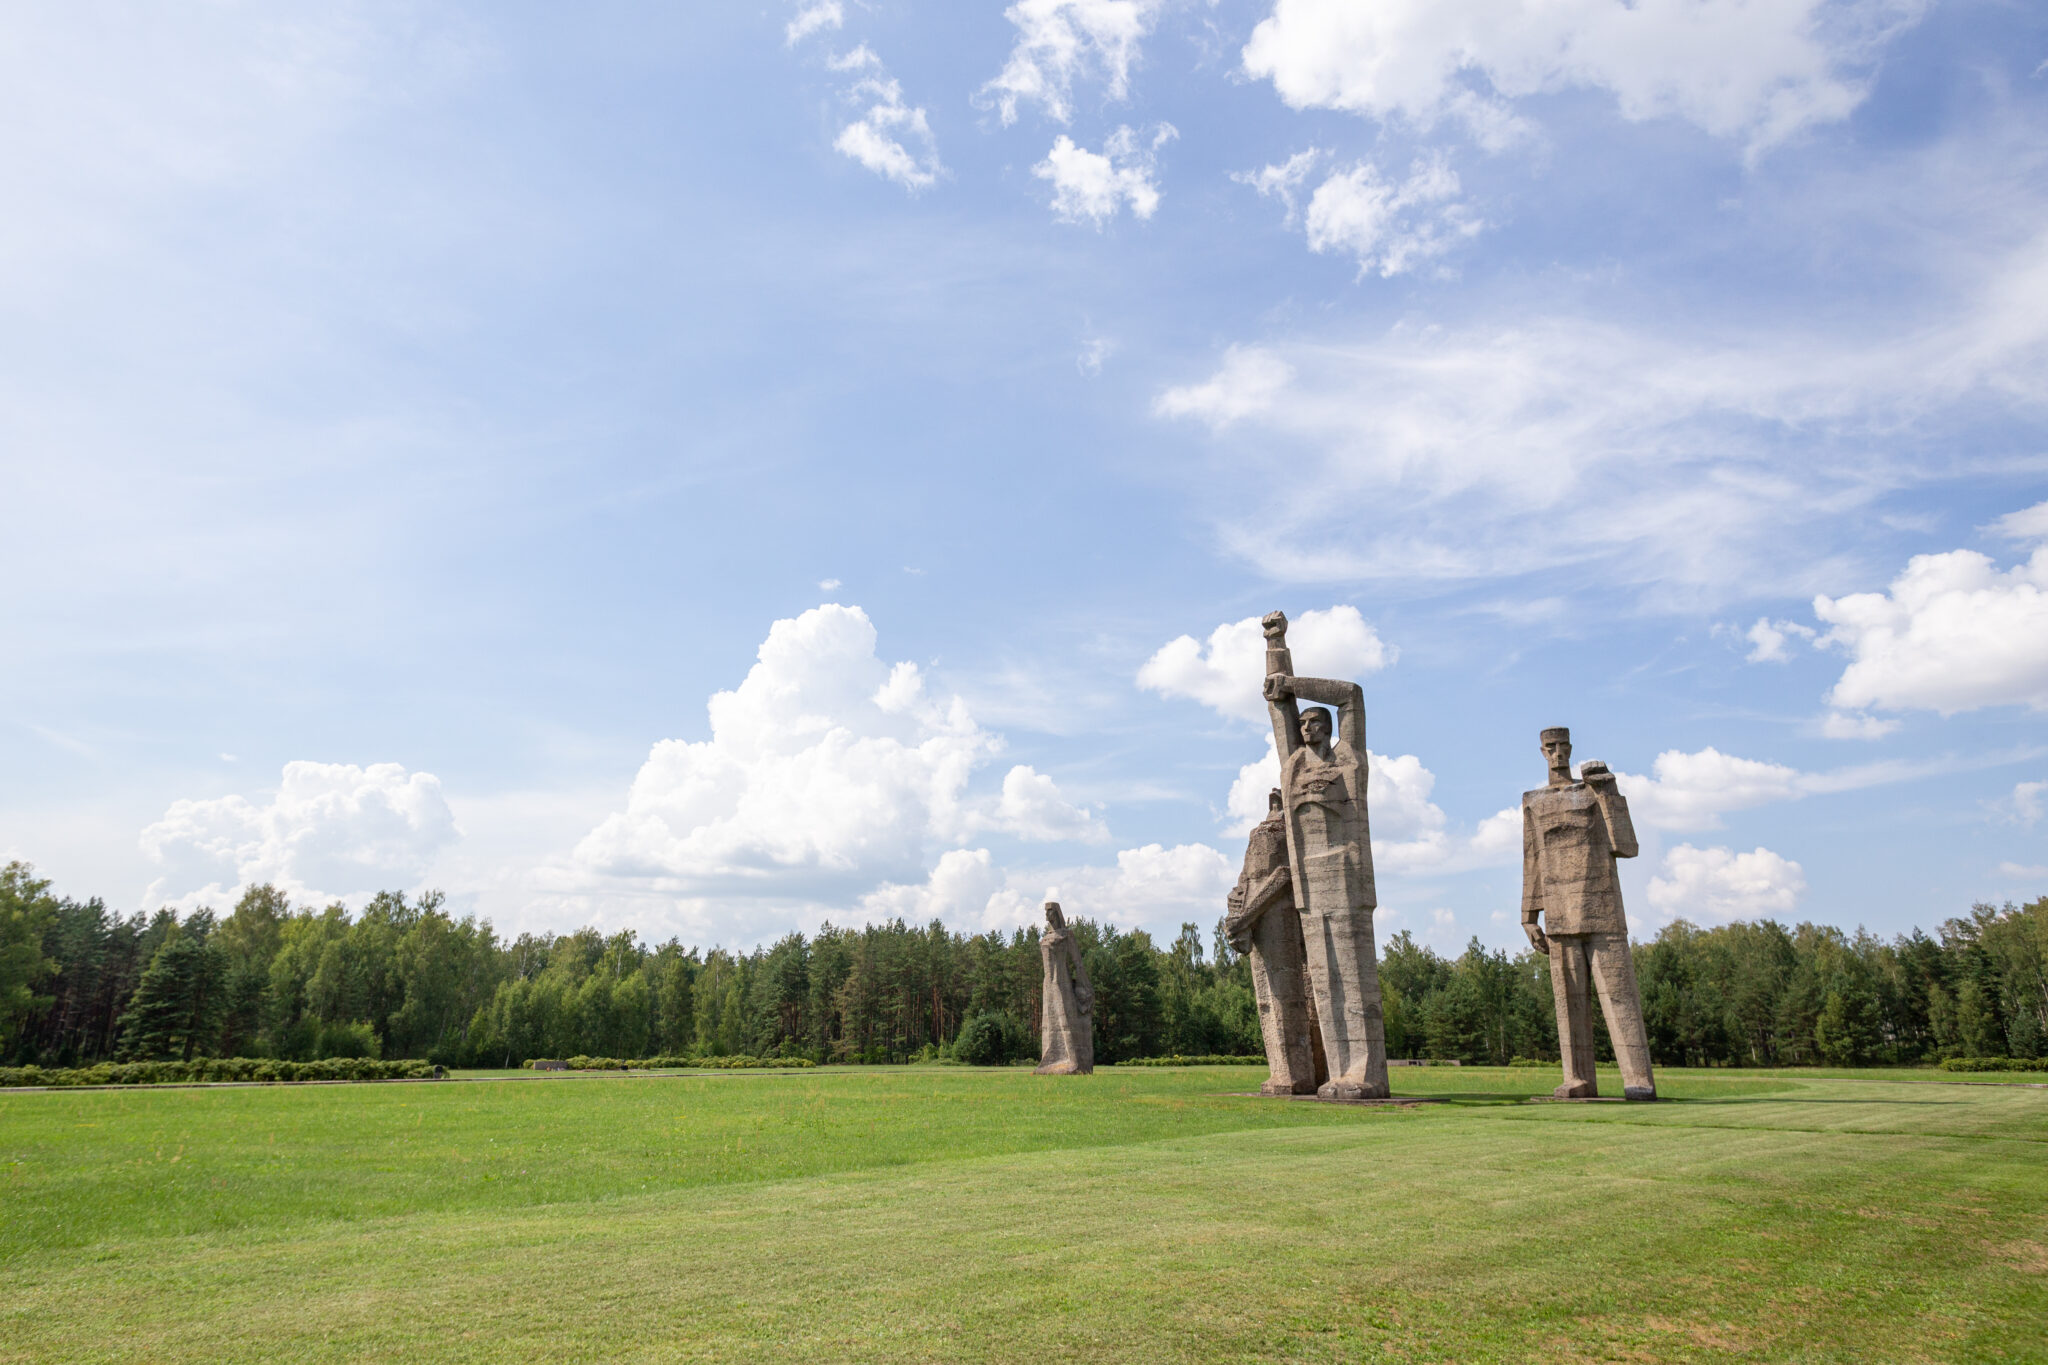 Salaspils Memorial Ensemble: Remembering History's Echoes